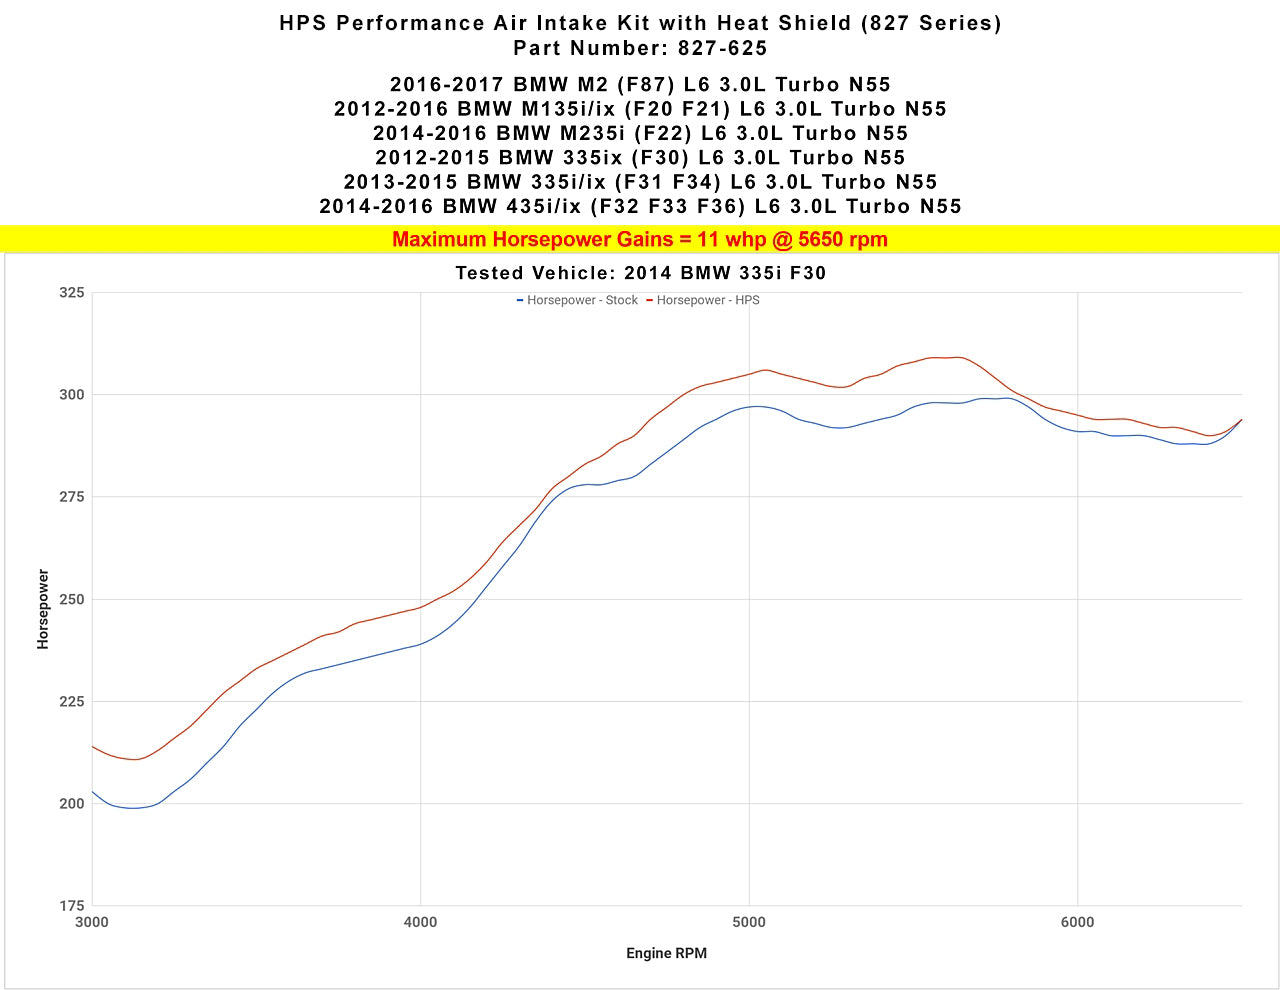 Dyno proven gains 11 whp HPS Performance Shortram Air Intake Kit 2013-2015 BMW 335i 335ix F31 F34 3.0L Turbo N55 827-625WB